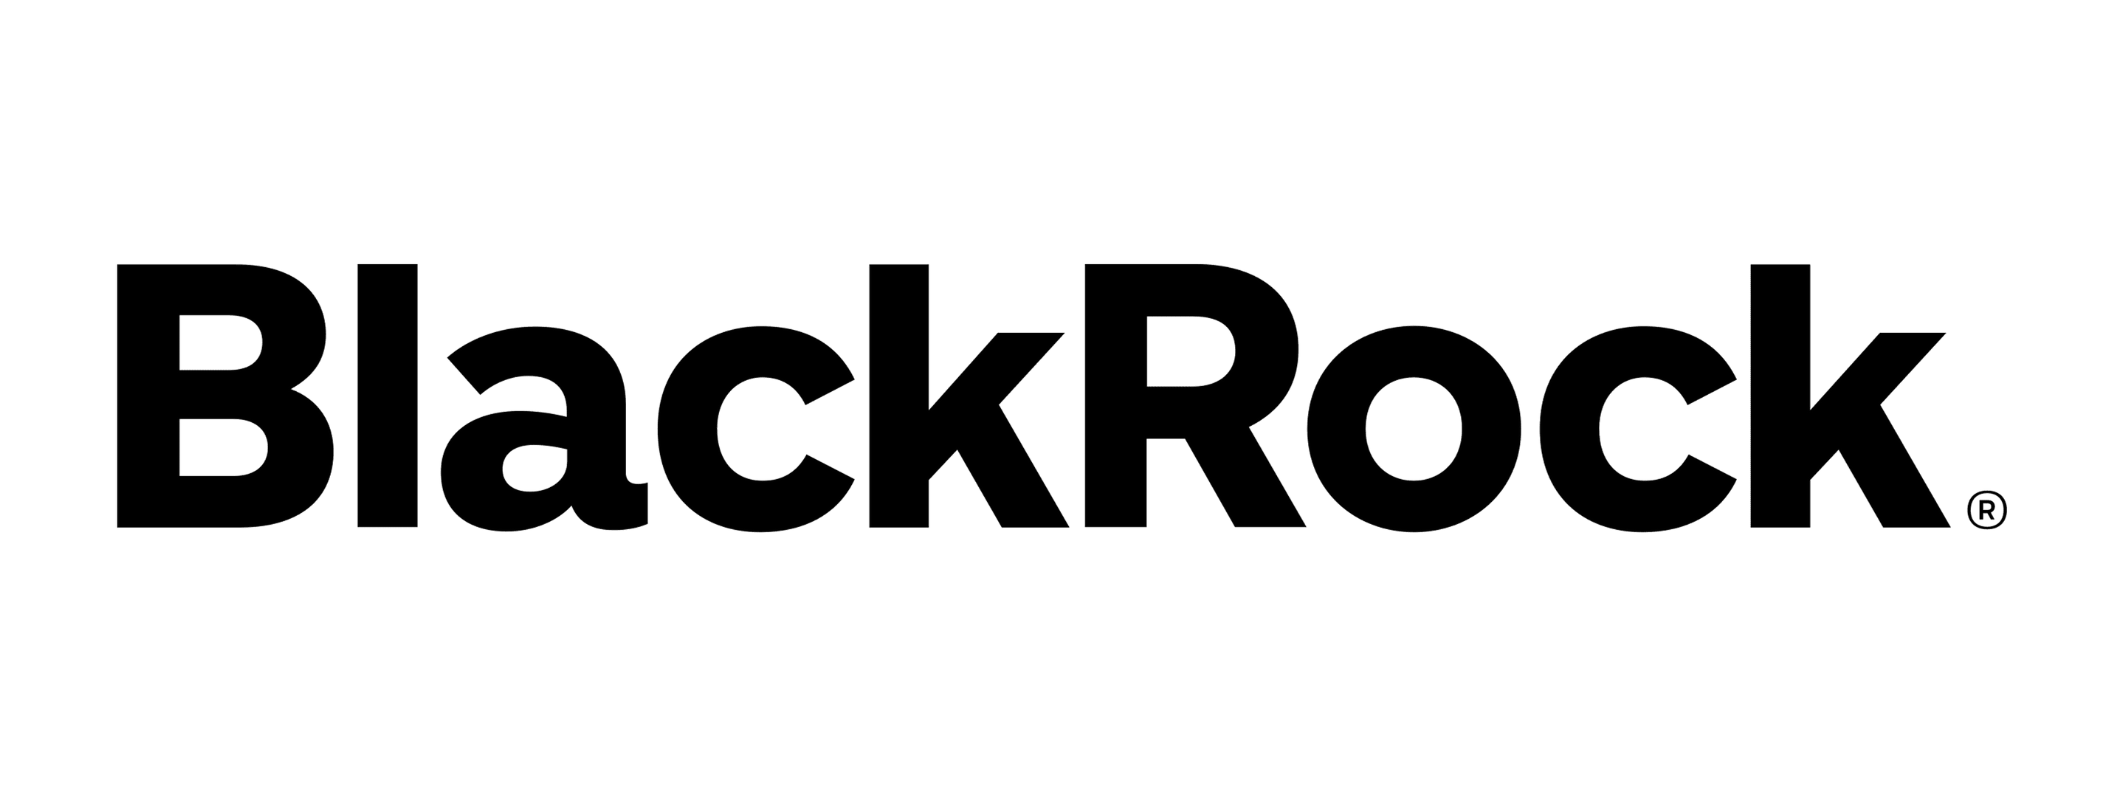 BlackRock-1